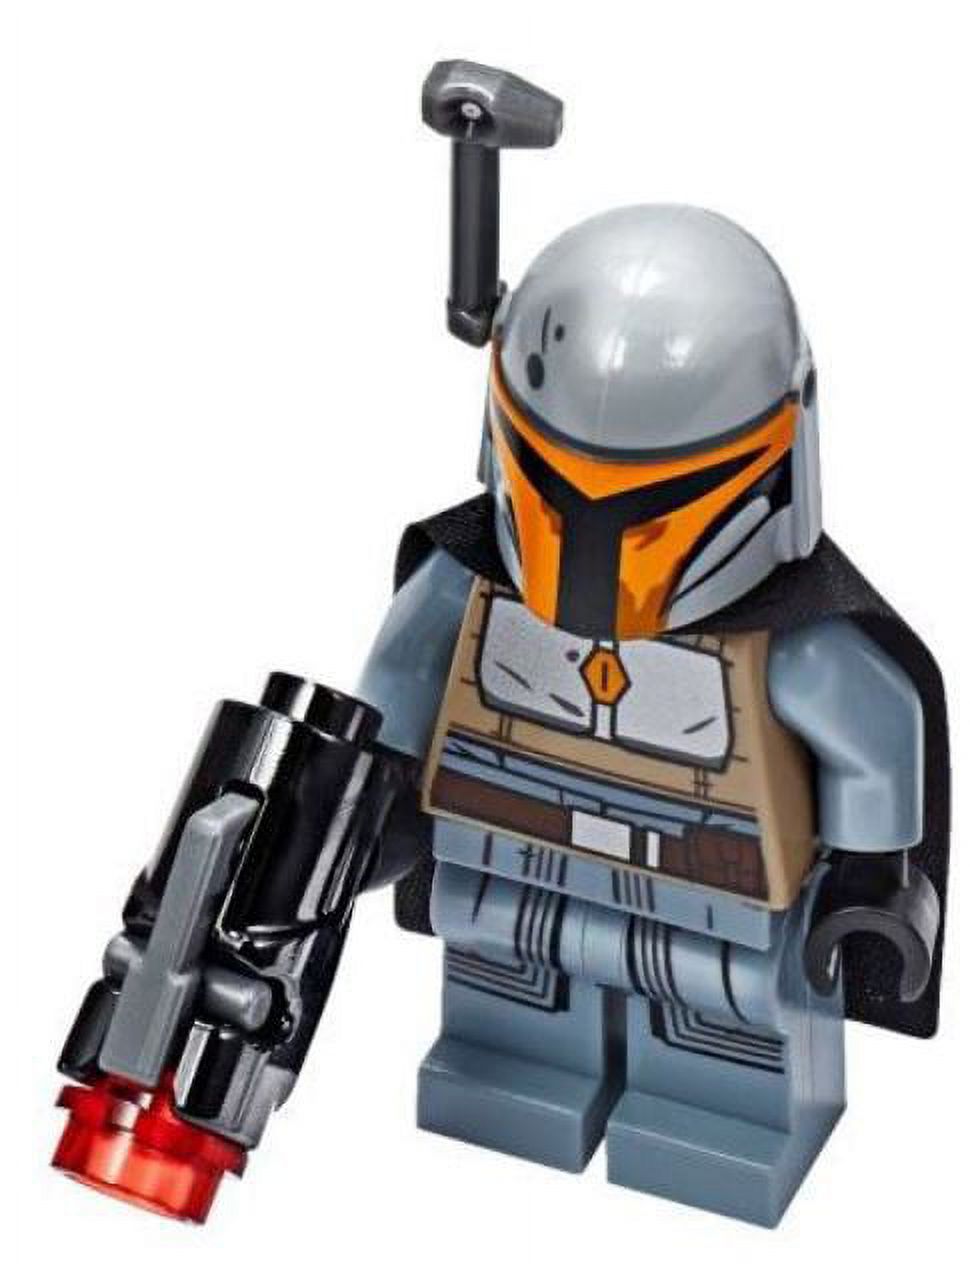 LEGO Star Wars The Mandalorian Female Mandalorian Warrior Minifigure [Sand Blue, Black Cape, Gray Helmet / Rangefinder] [No Packaging] - image 1 of 1